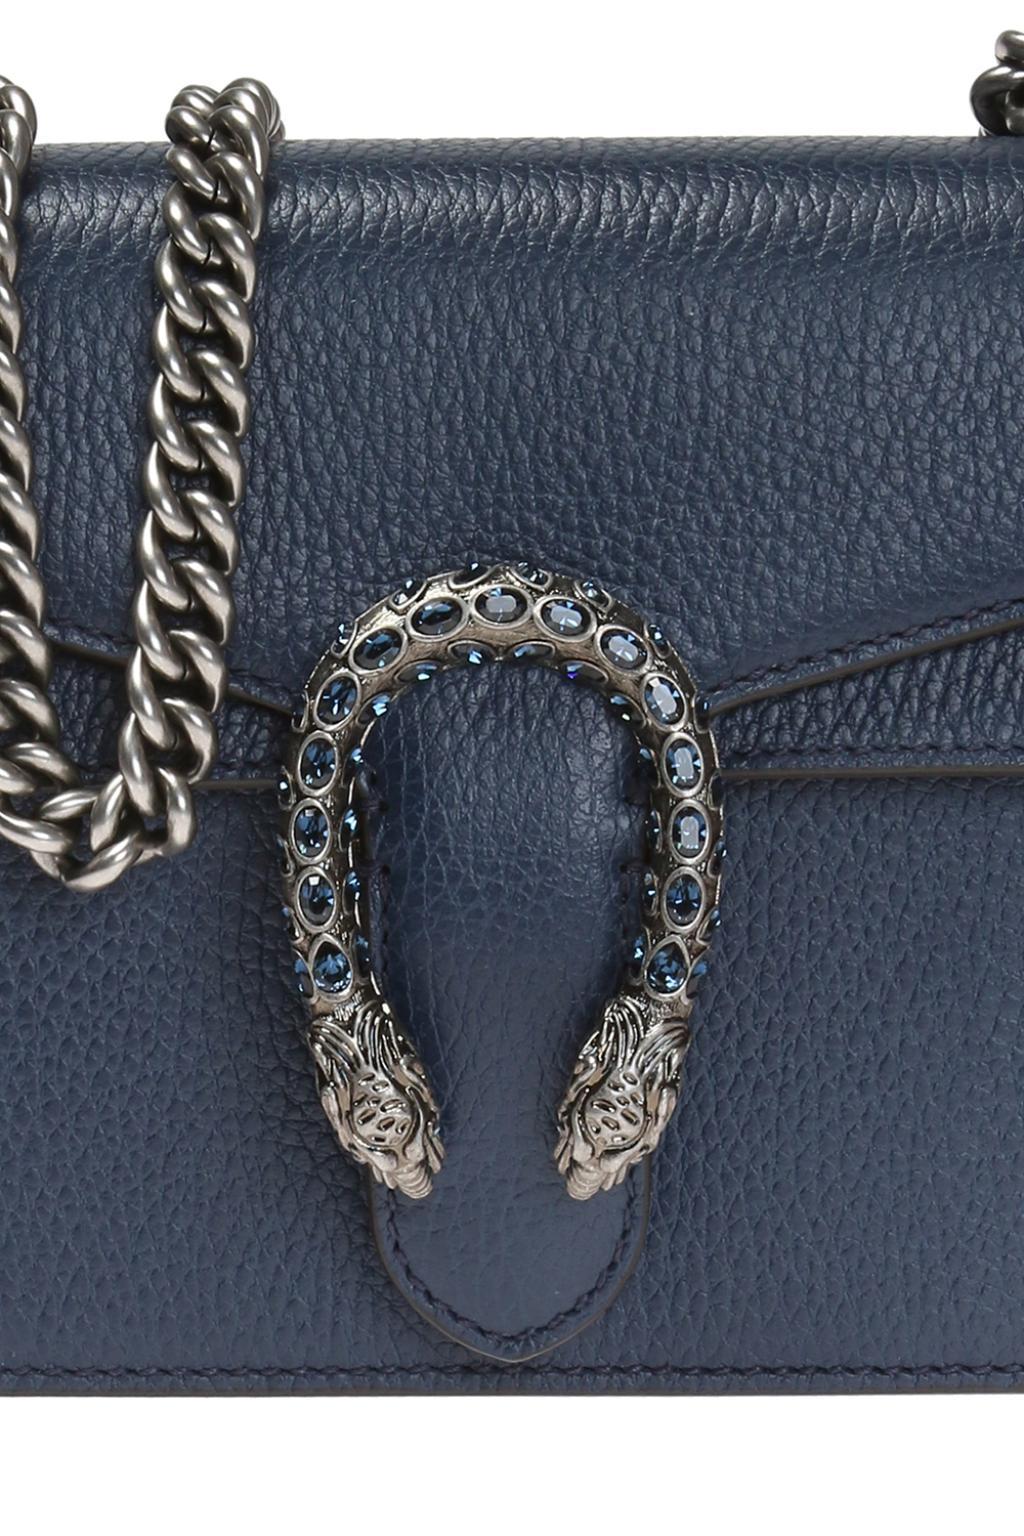 Gucci Leather 'dionysus' Shoulder Bag in Navy Blue (Blue) - Lyst